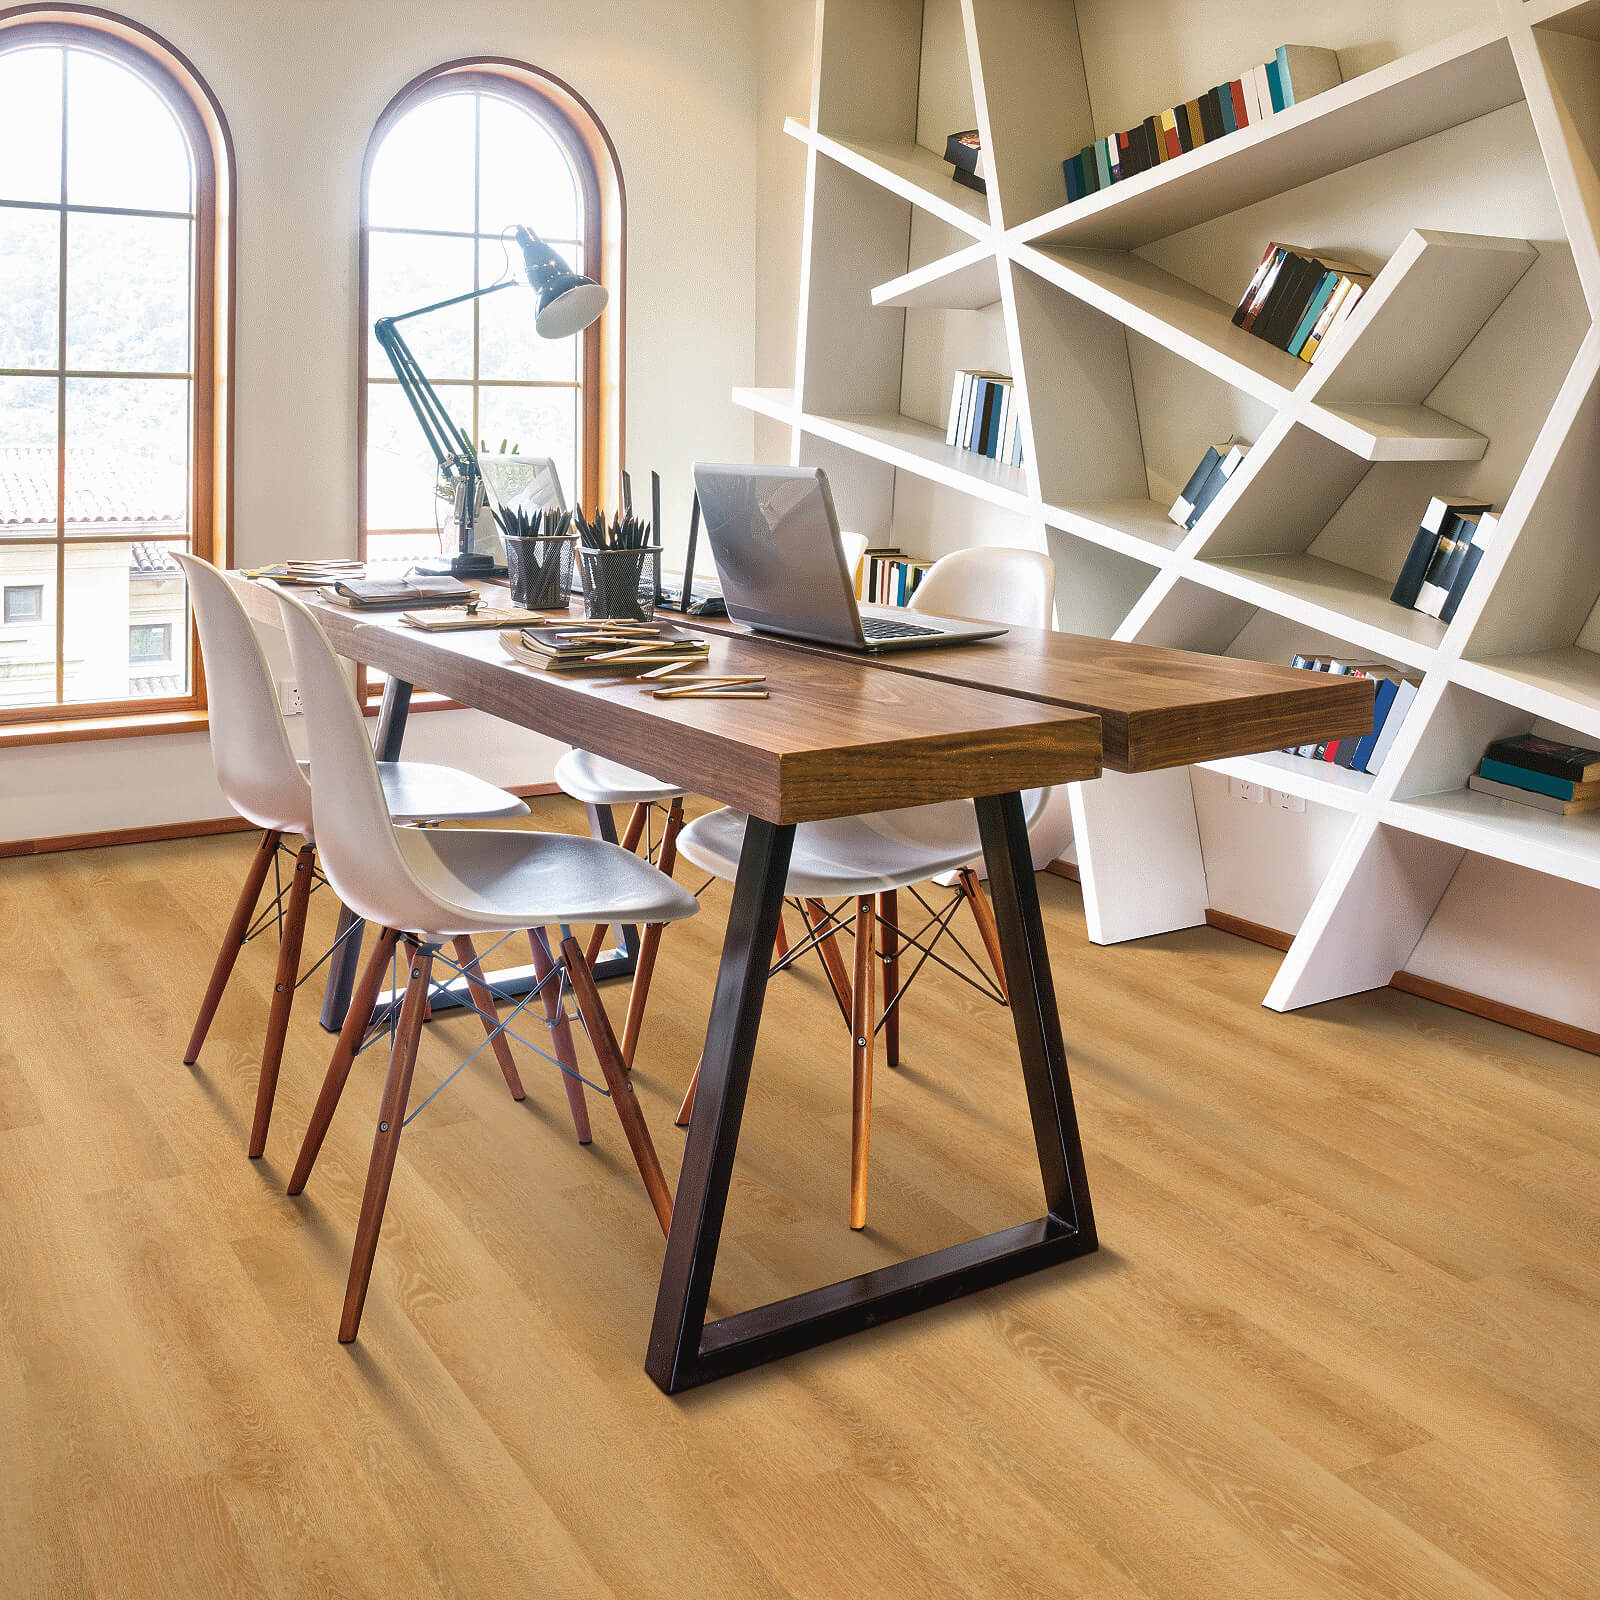 Vinyl flooring for study room | CarpetsPlus COLORTILE & Wholesale Flooring